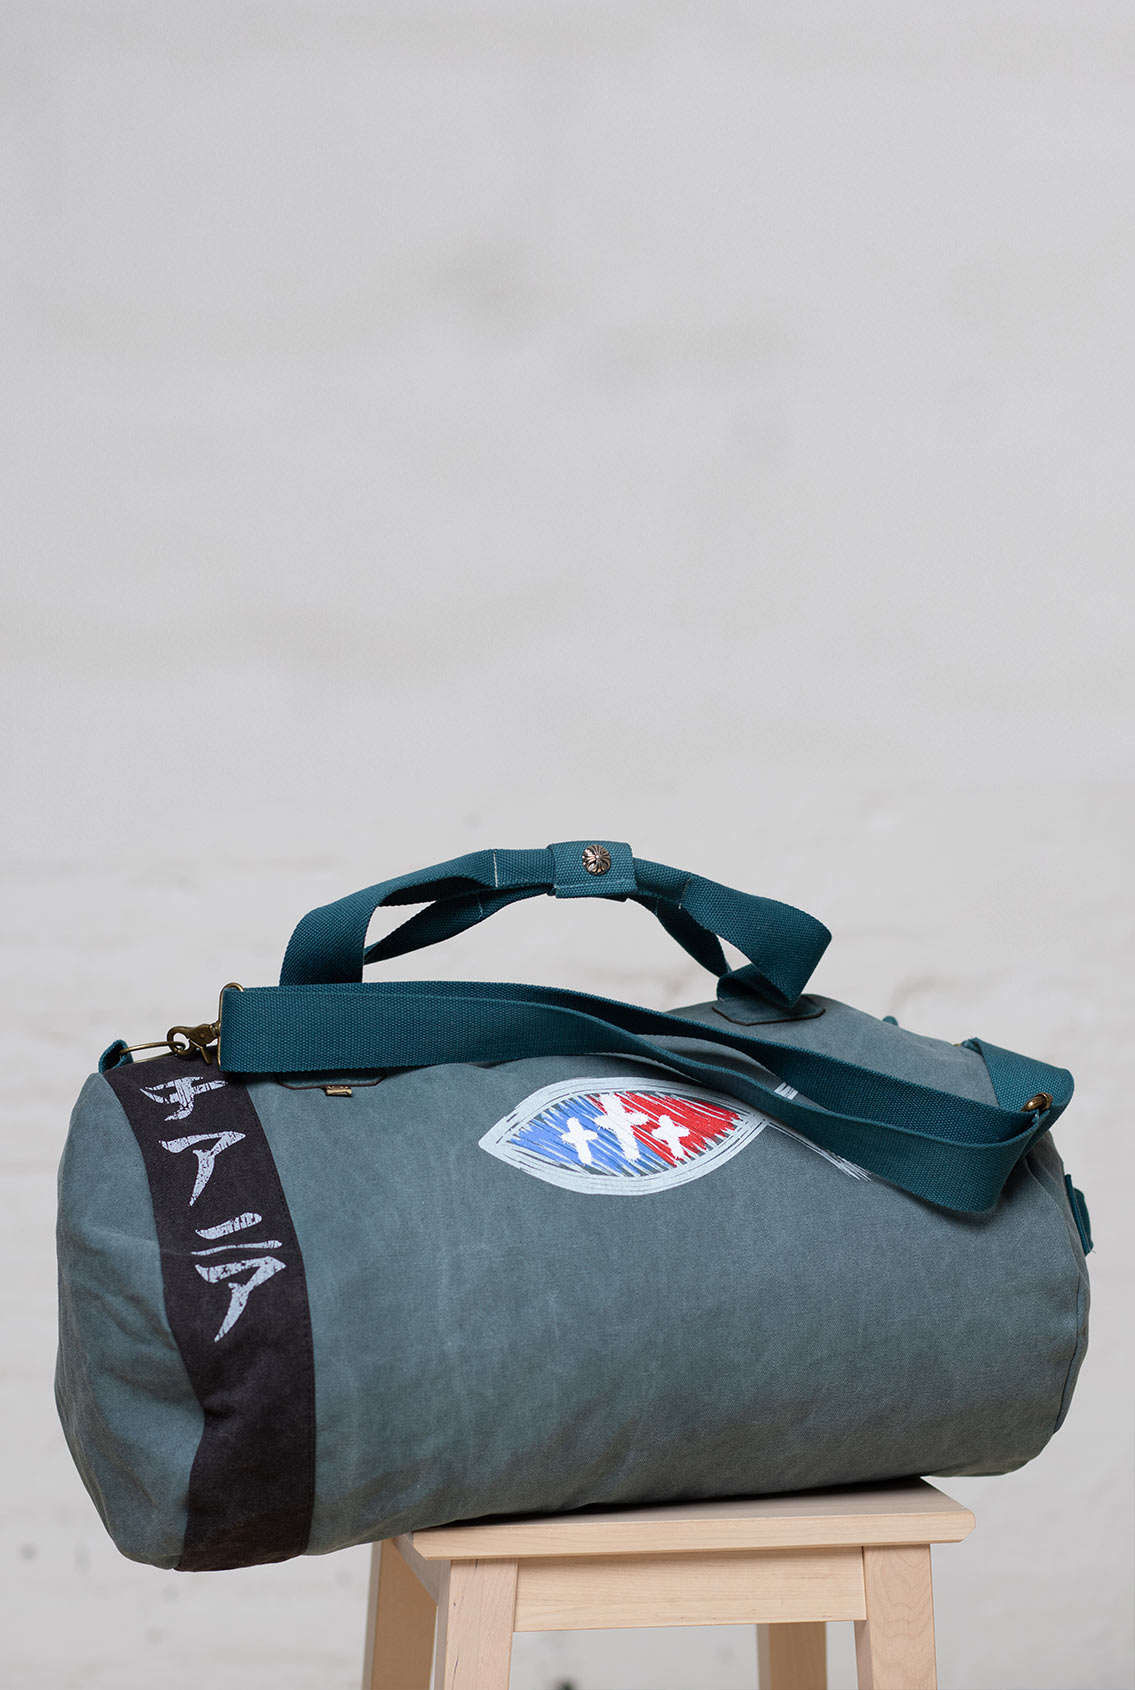 Travel bag with Ichthys symbol